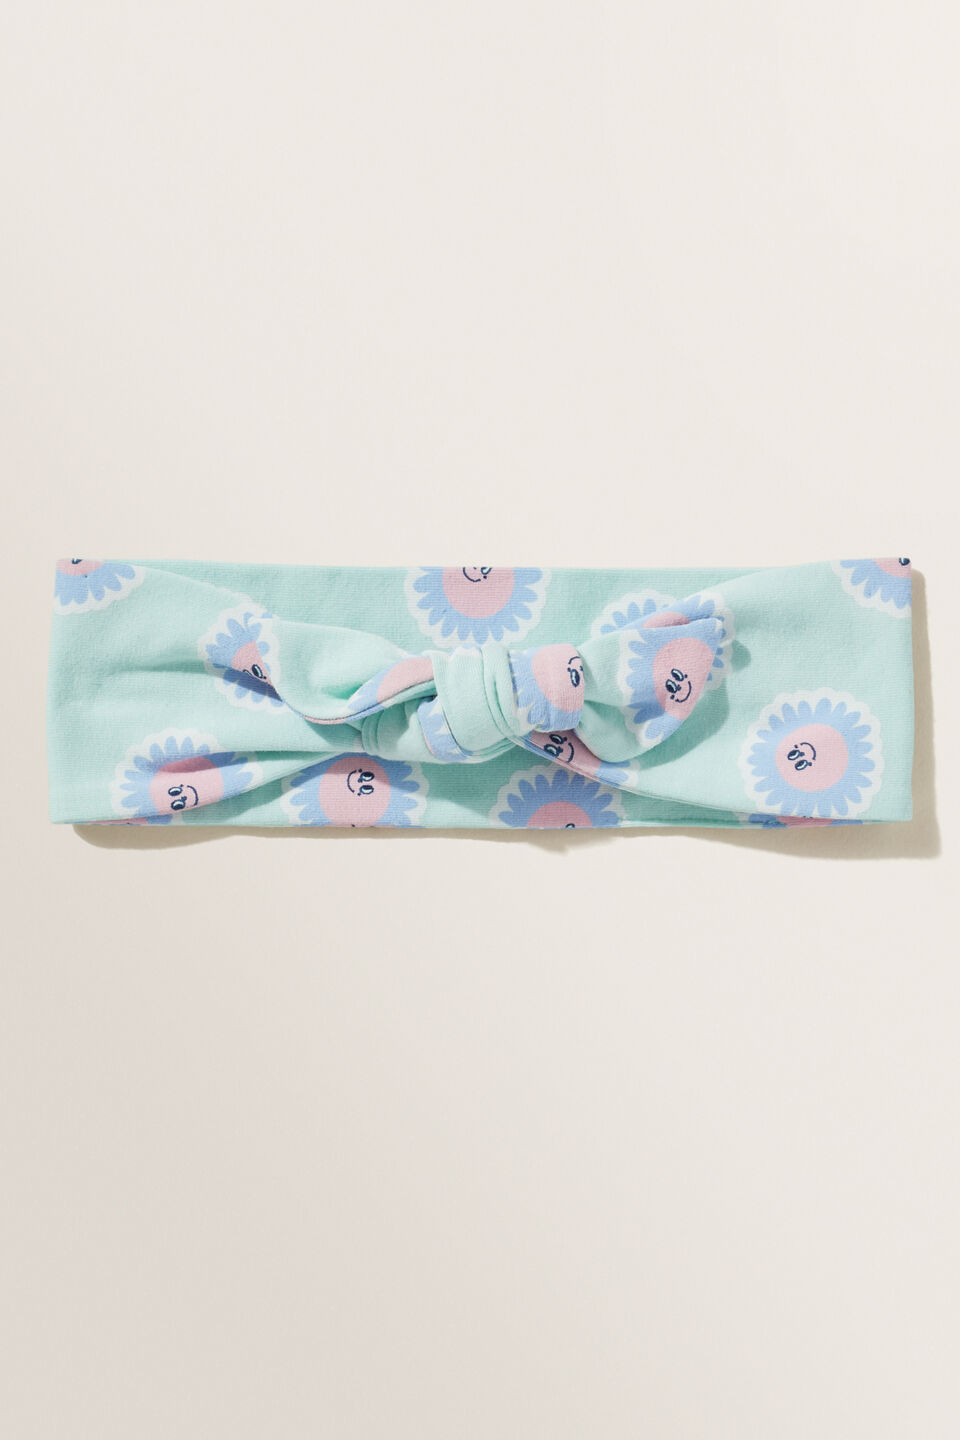 Flower Fabric Headband  Aqua Mint